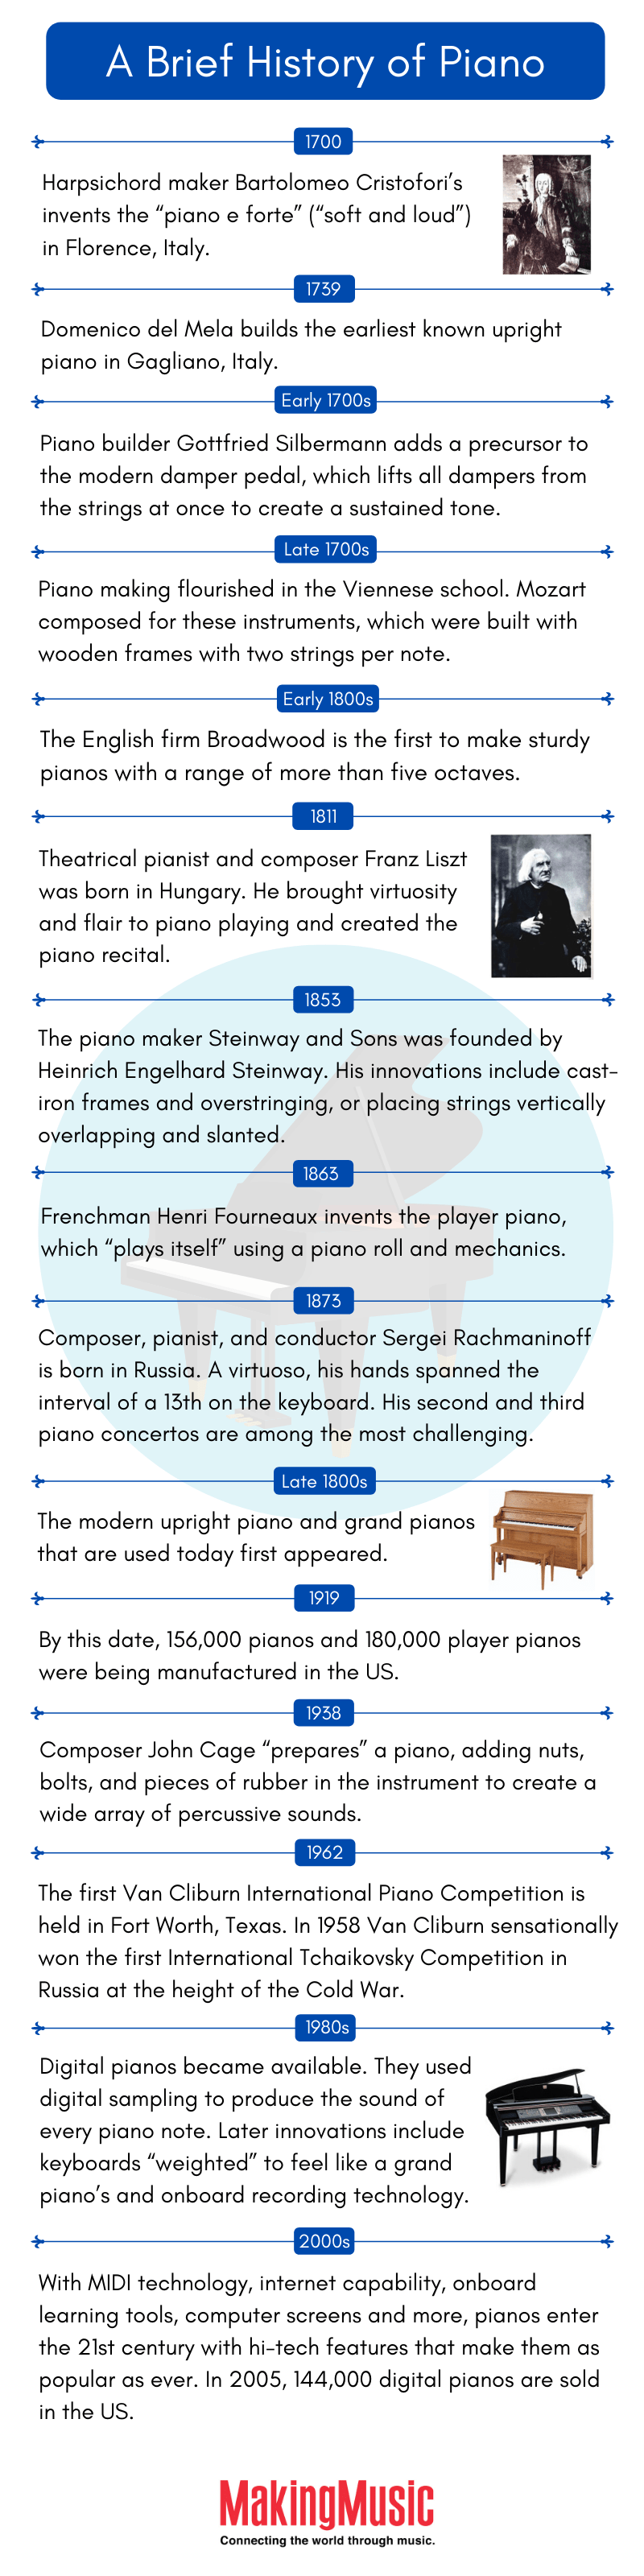 piano history timeline